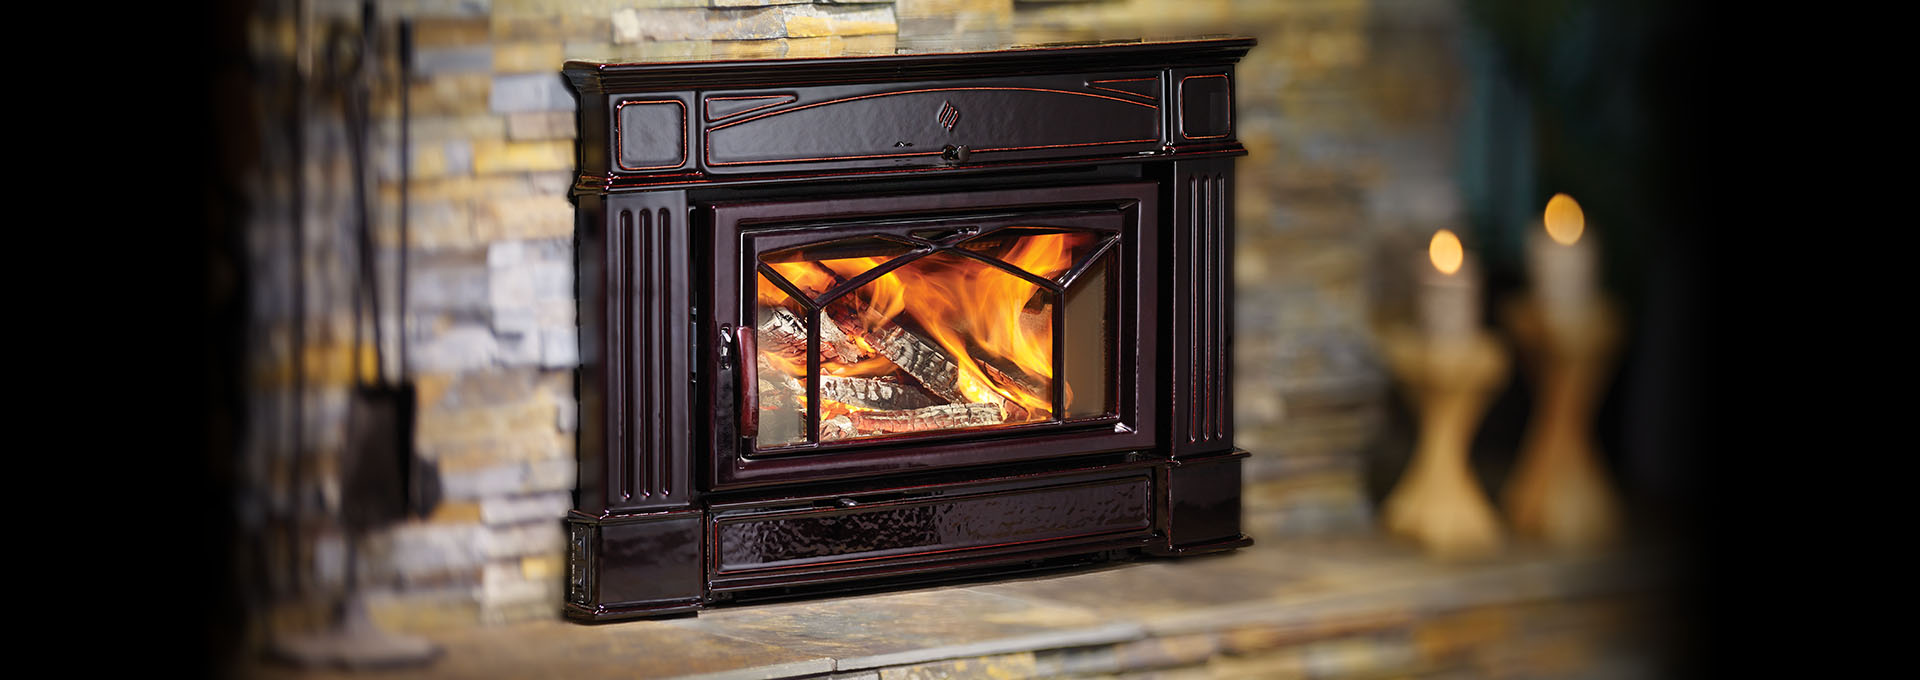 Gas Fireplace Heater Insert Luxury Wood Inserts Epa Certified